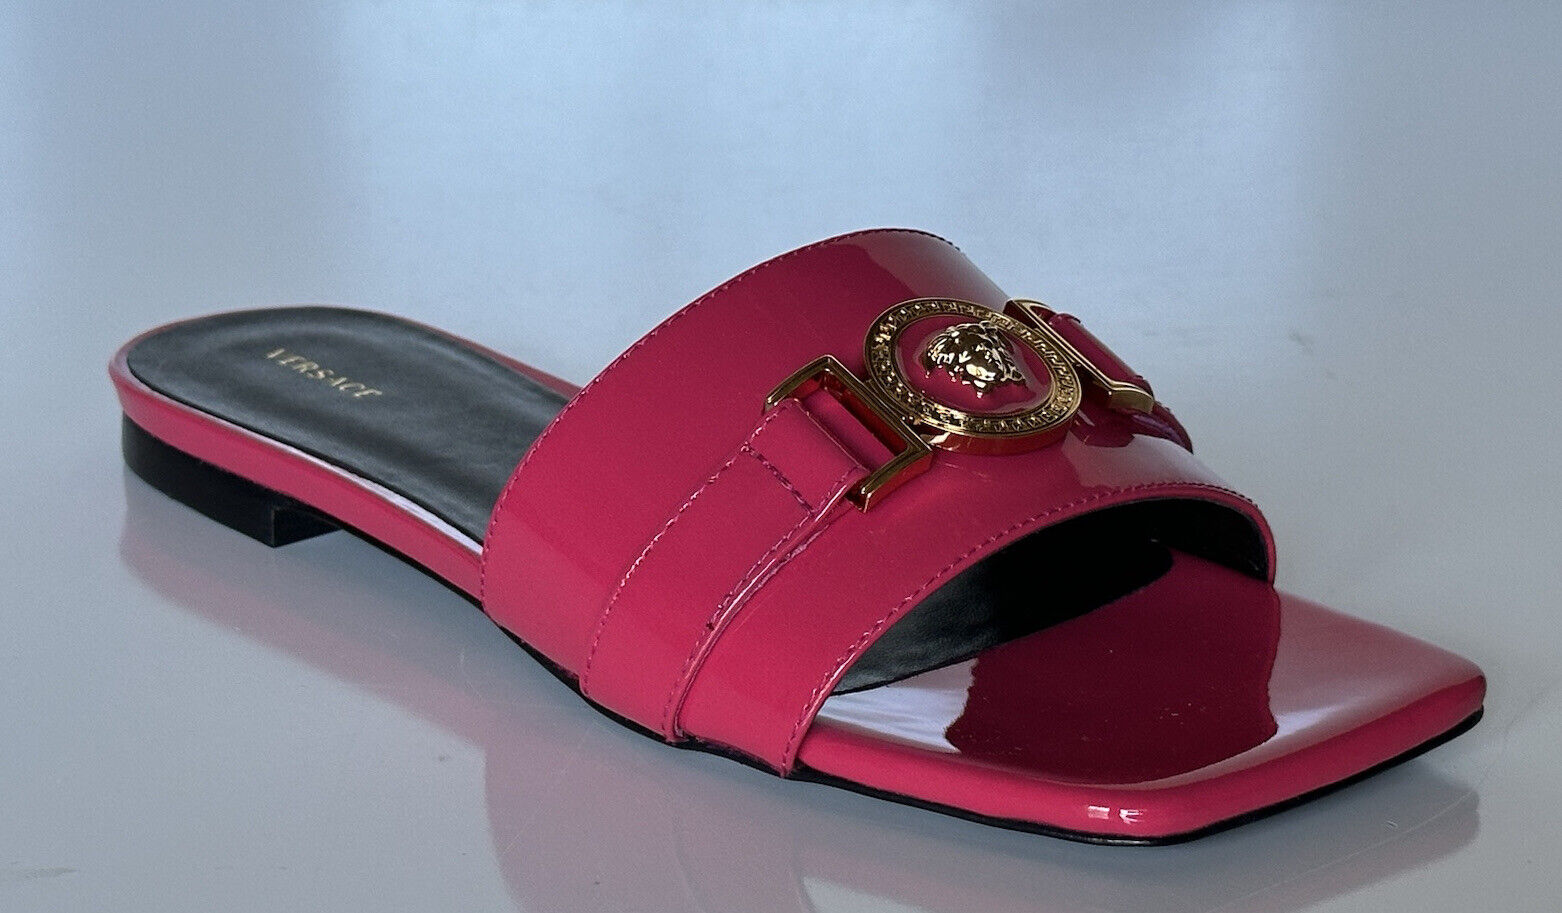 NIB $850 VERSACE Medusa Women's Fuxia Oro Sandals 6 US (36 Euro) 1006144 Spain